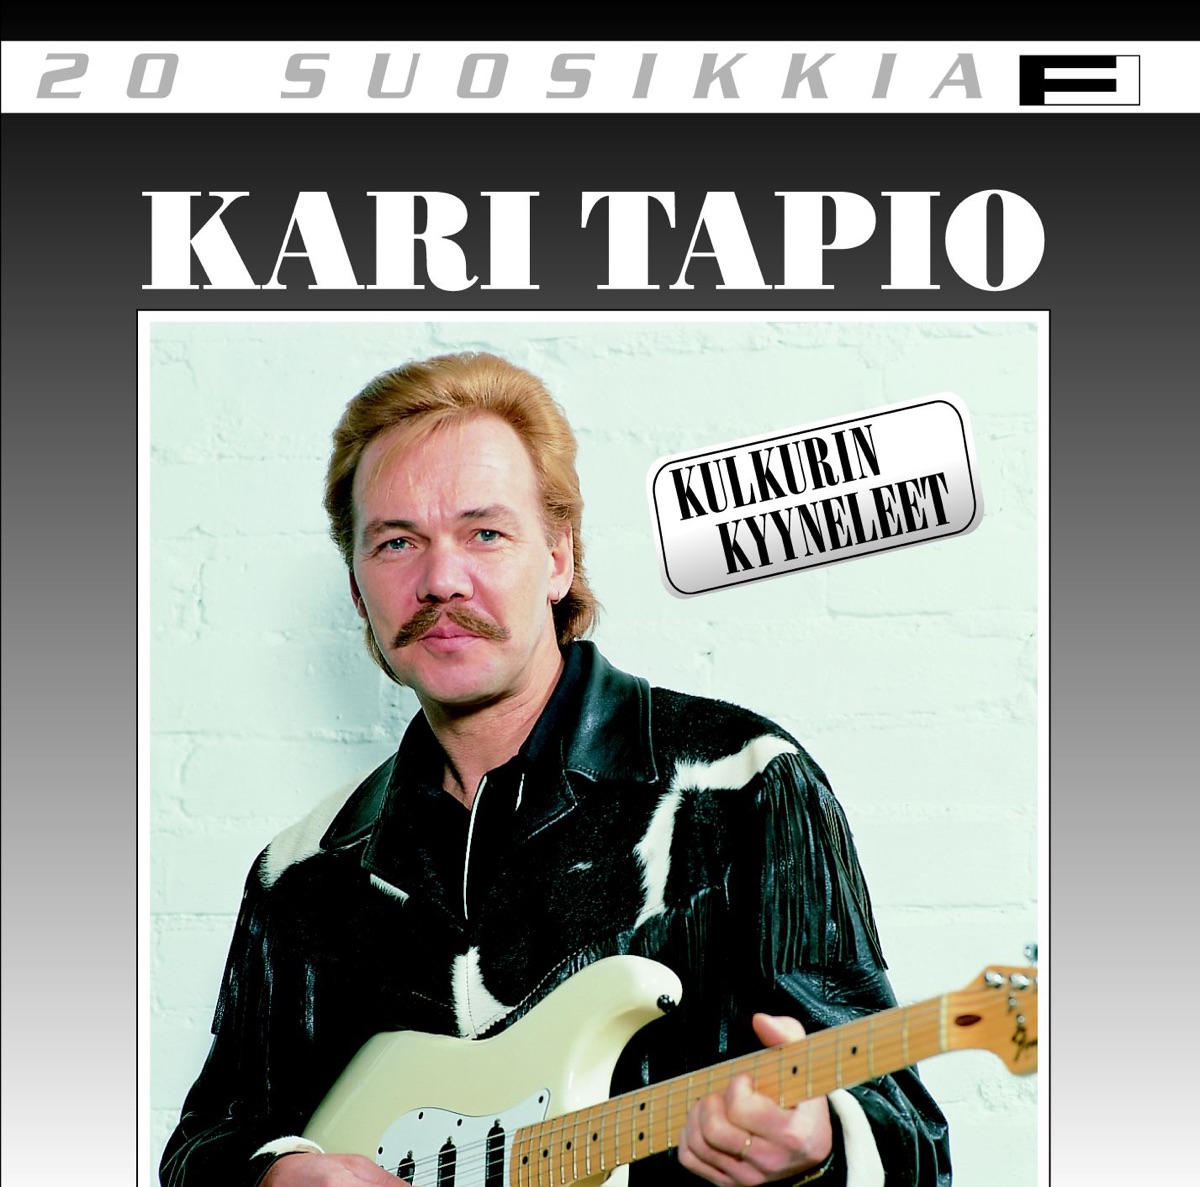 Täydet 100 - Album by Kari Tapio - Apple Music